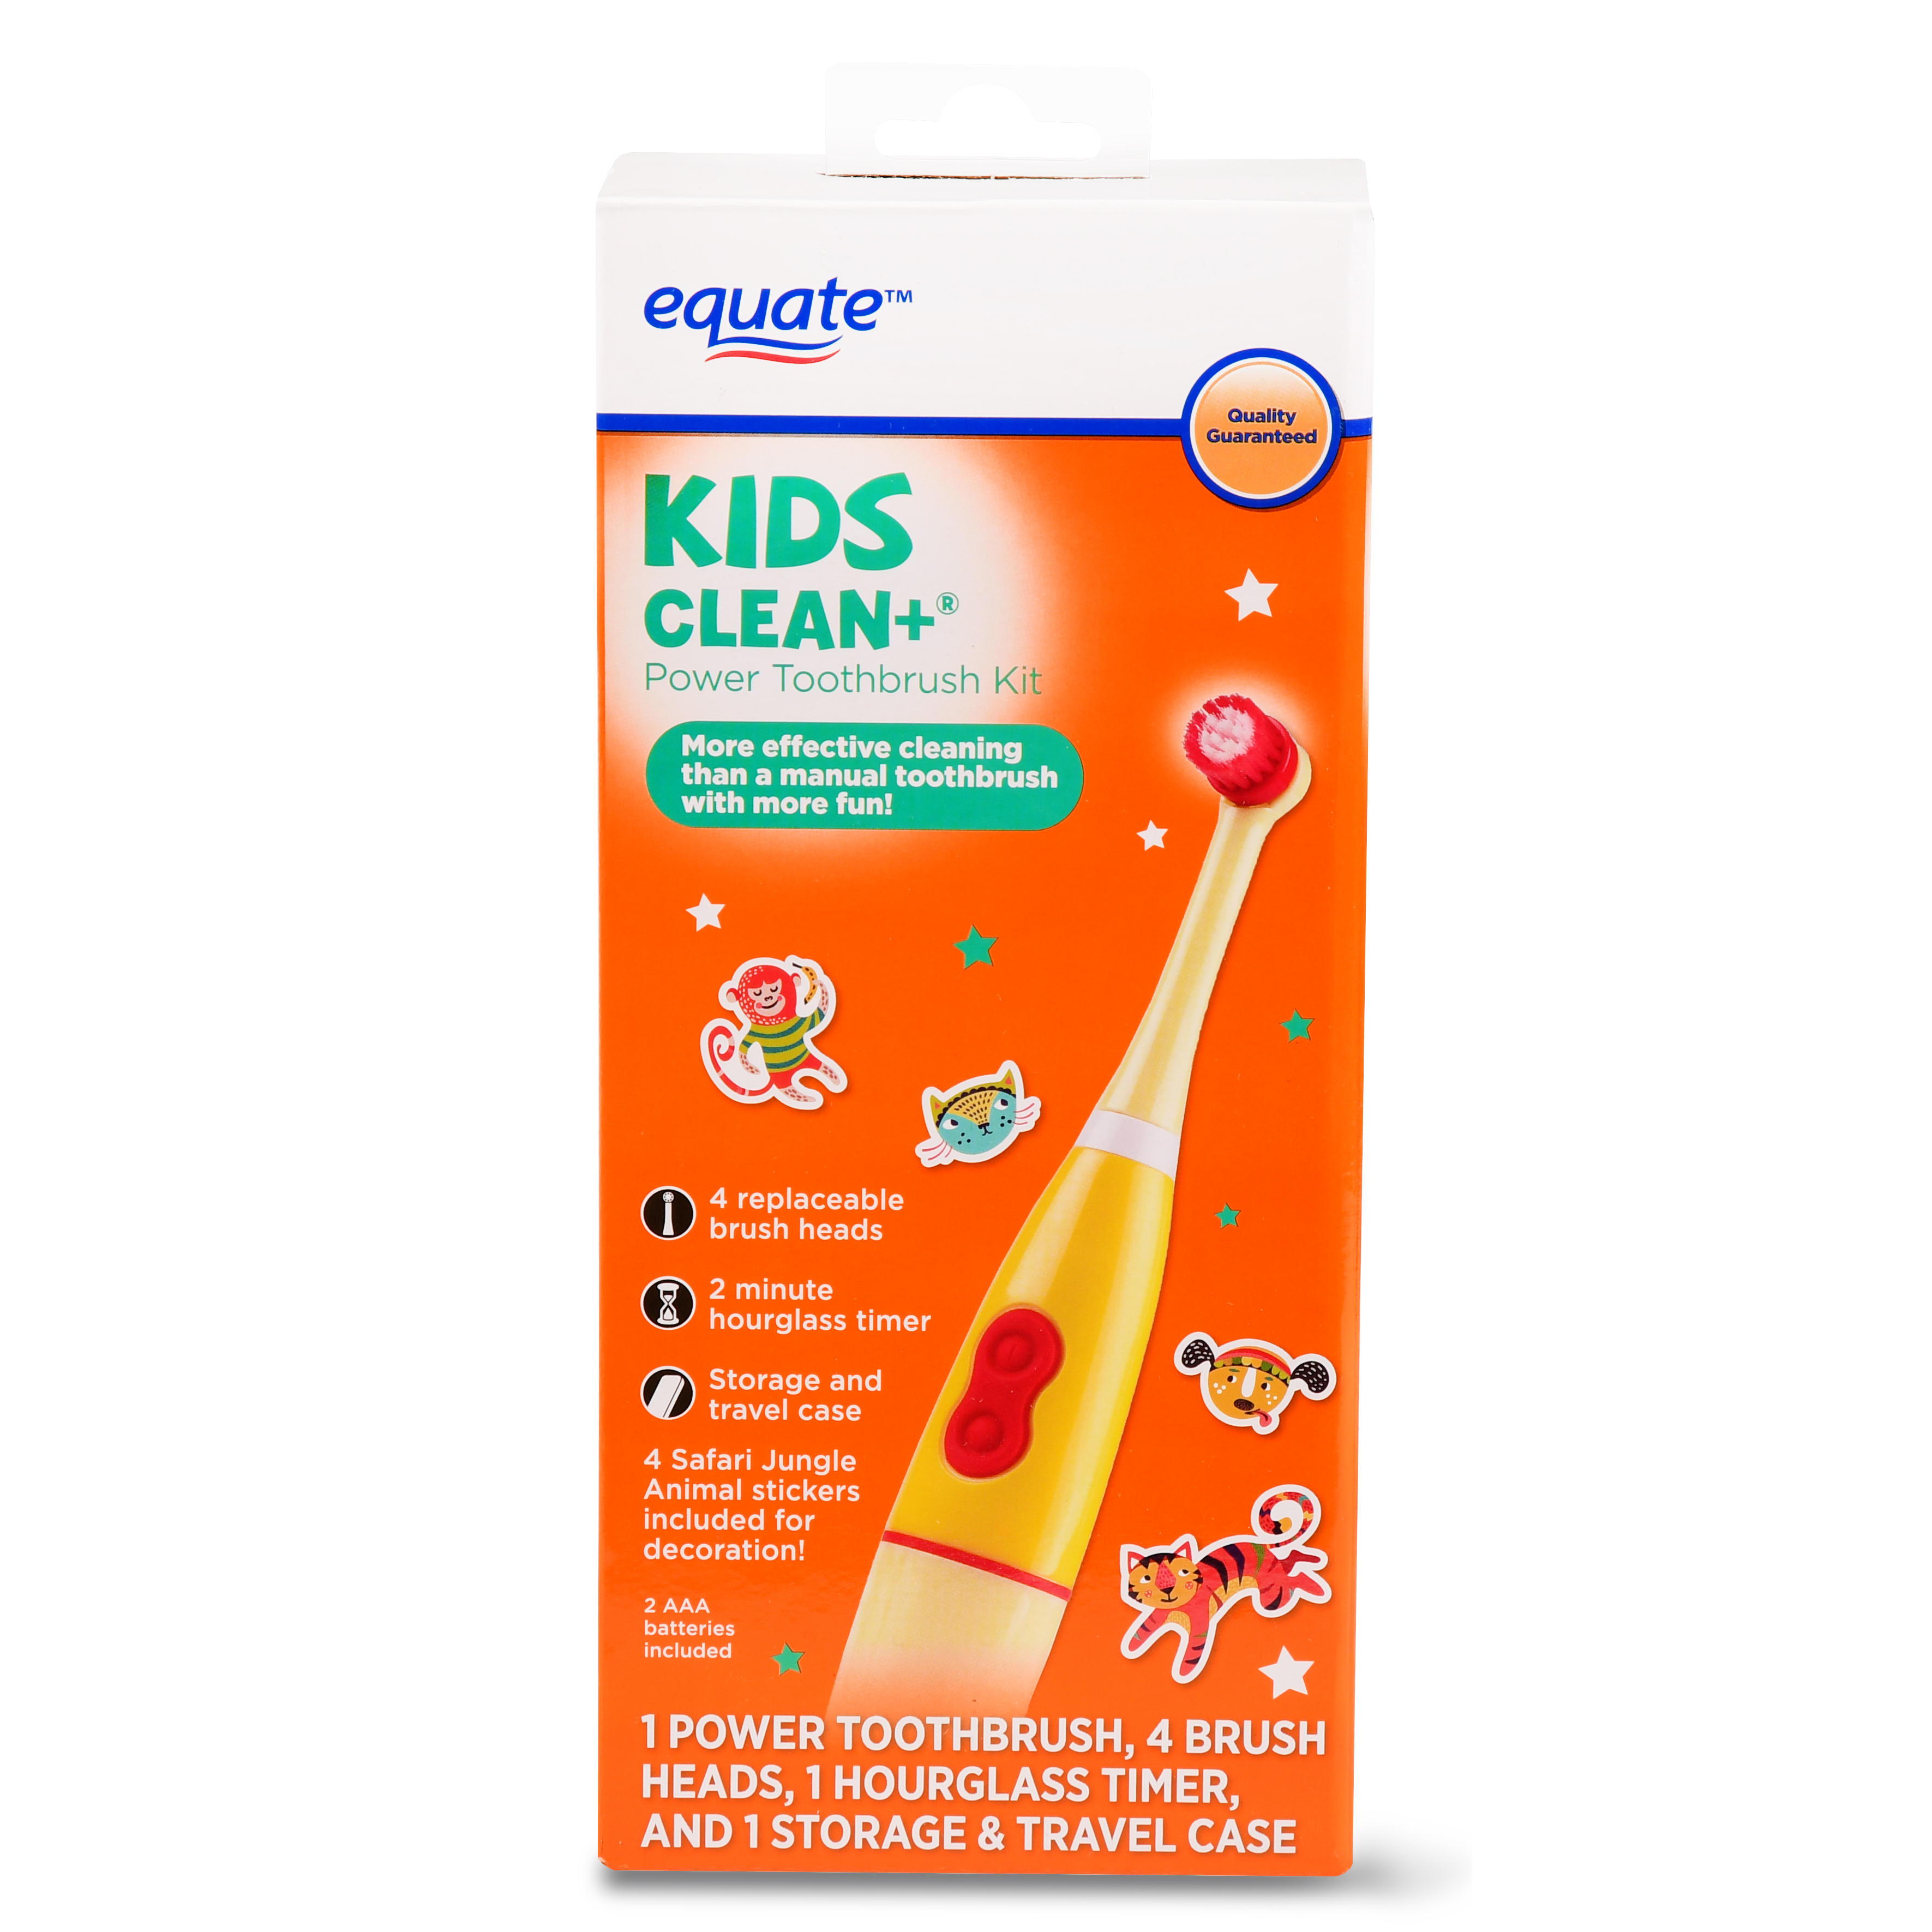 Equate Kids Clean+ Power Toothbrush Kit - image 1 of 8